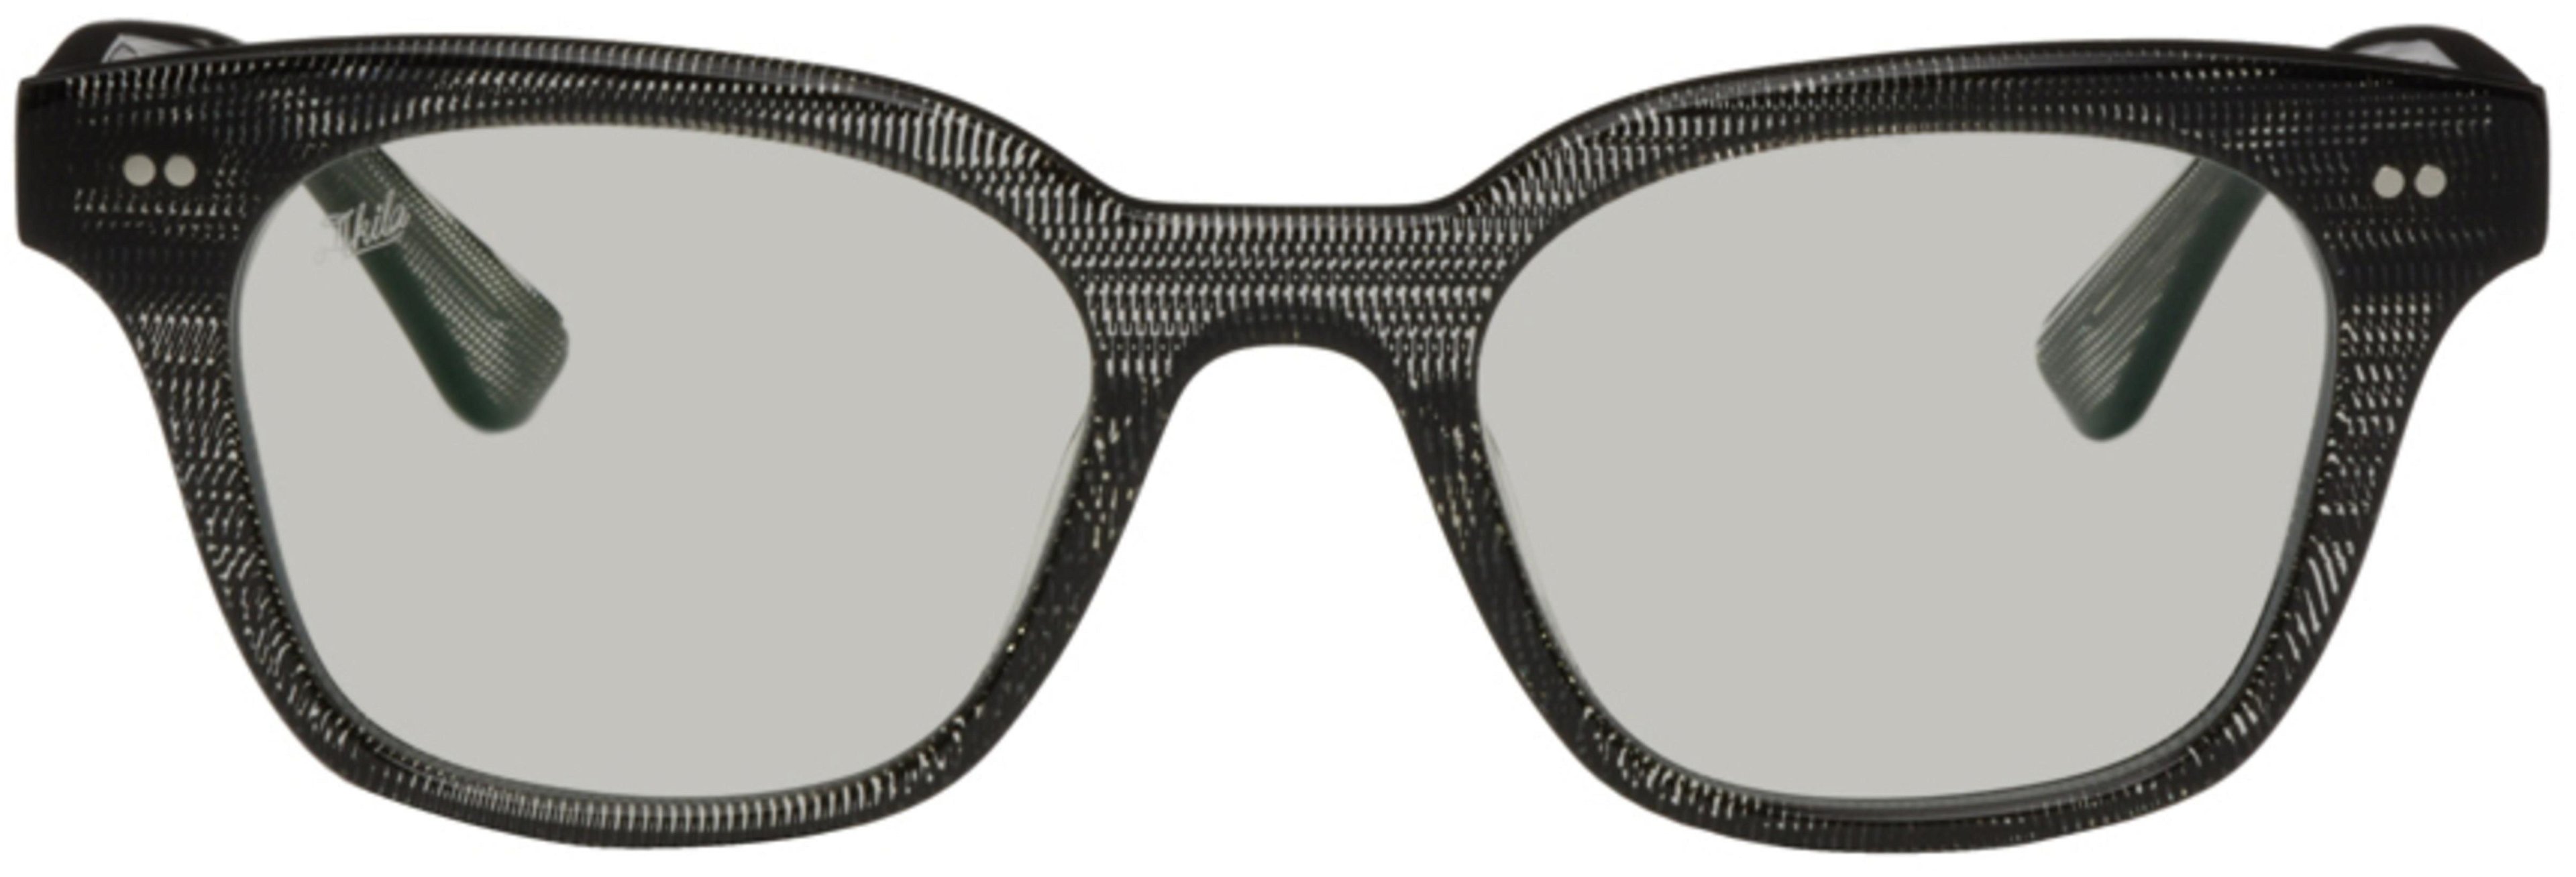 Gray Hi-Fi 2.0 Glasses by AKILA